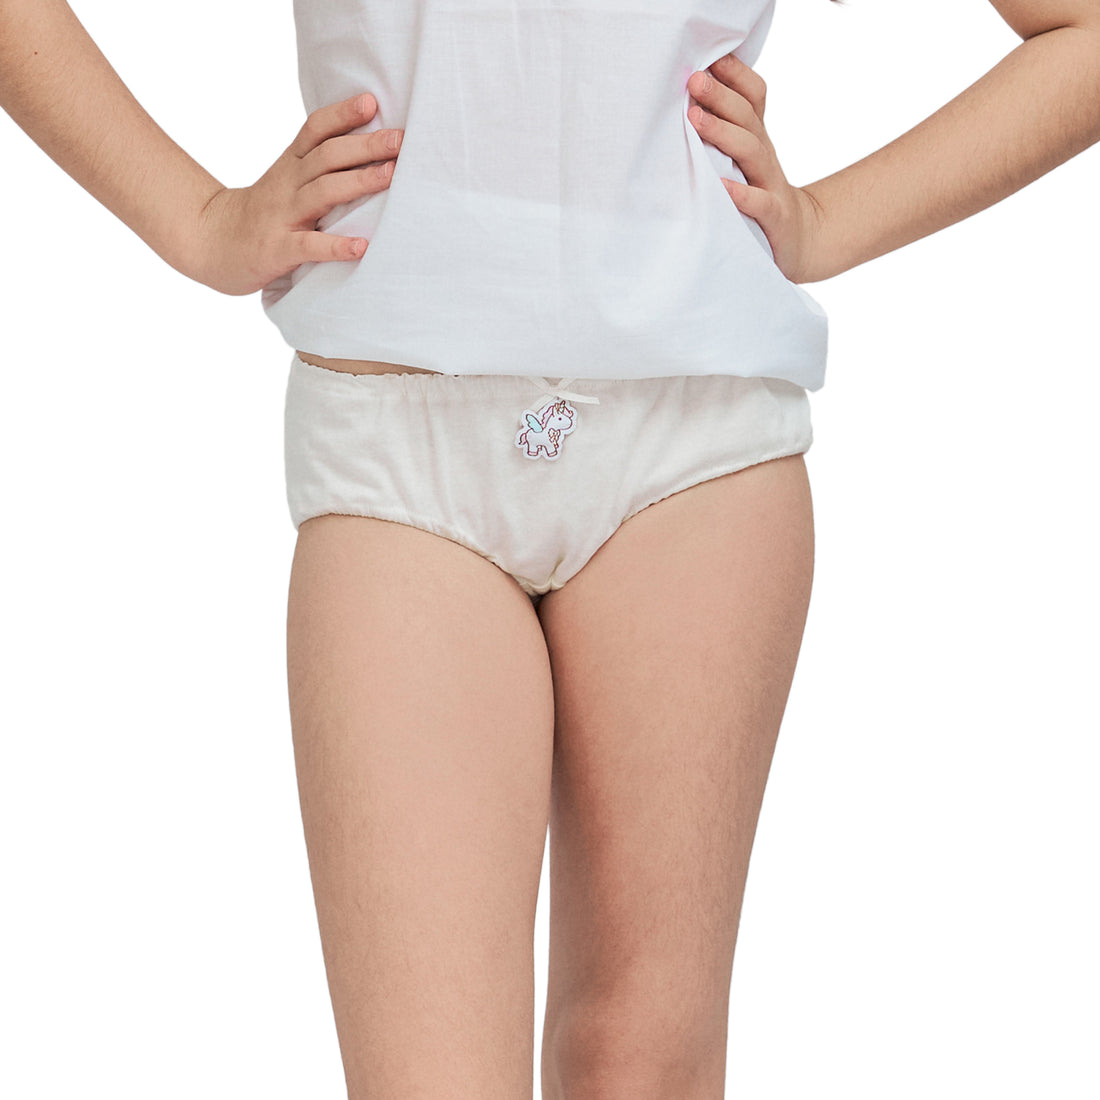 Wacoal Bloom Panty กางเกงในร้อยยางสำหรับเด็ก Pack 3 ชิ้น  รูปแบบ Half  รุ่น WU6A33 สีขาว (WH)